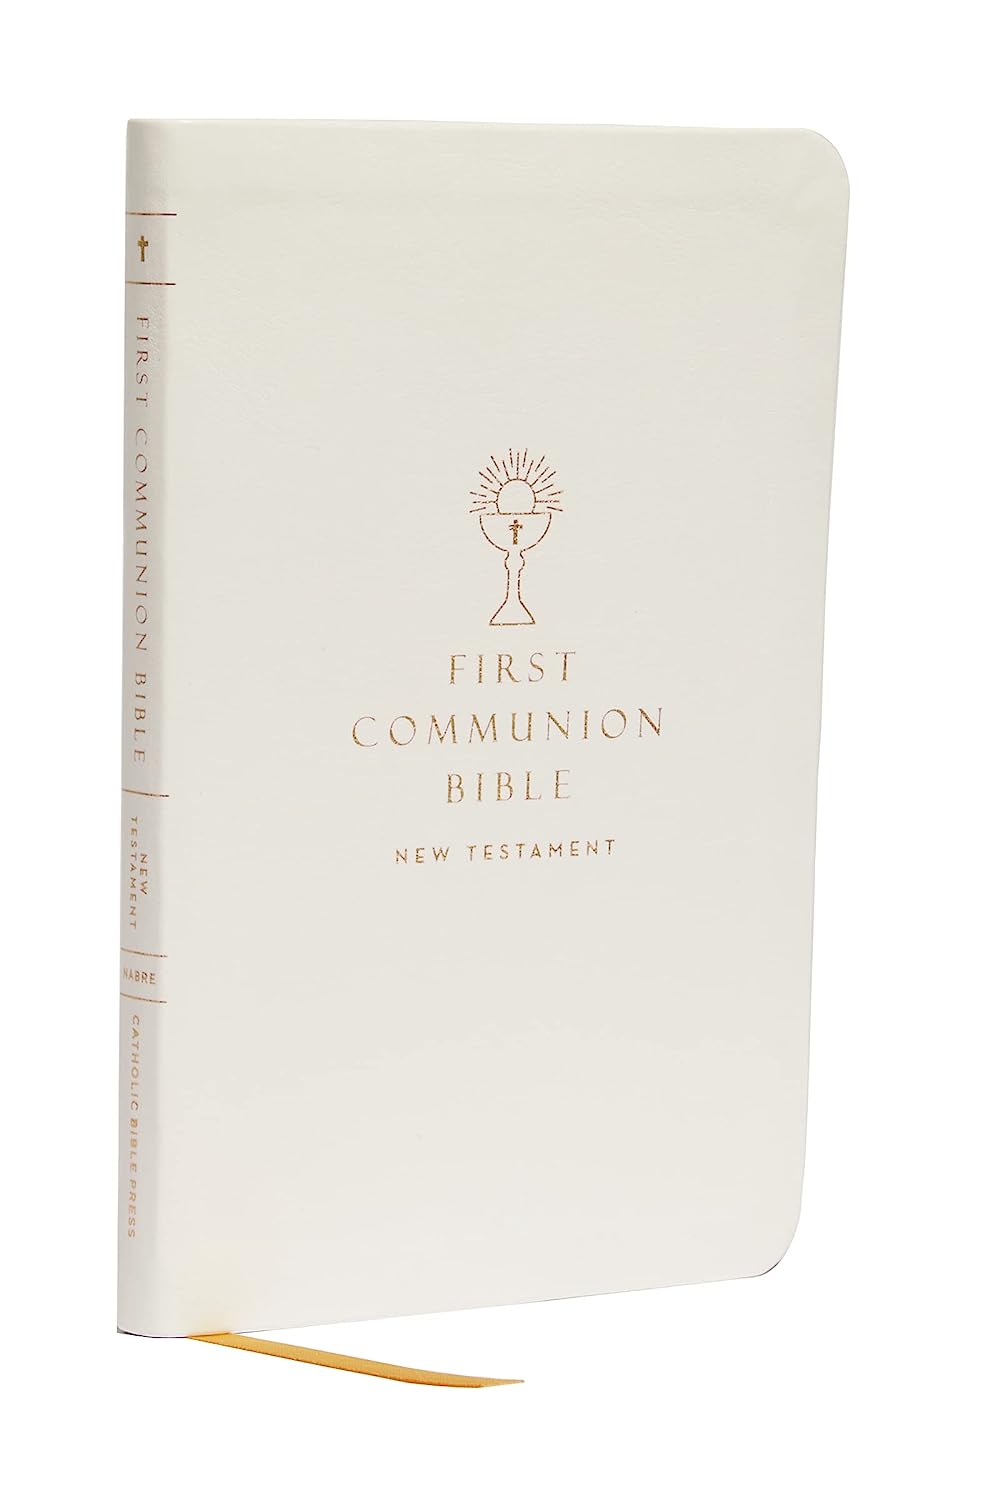 NABRE First Communion Bible New Testament White Slipcase